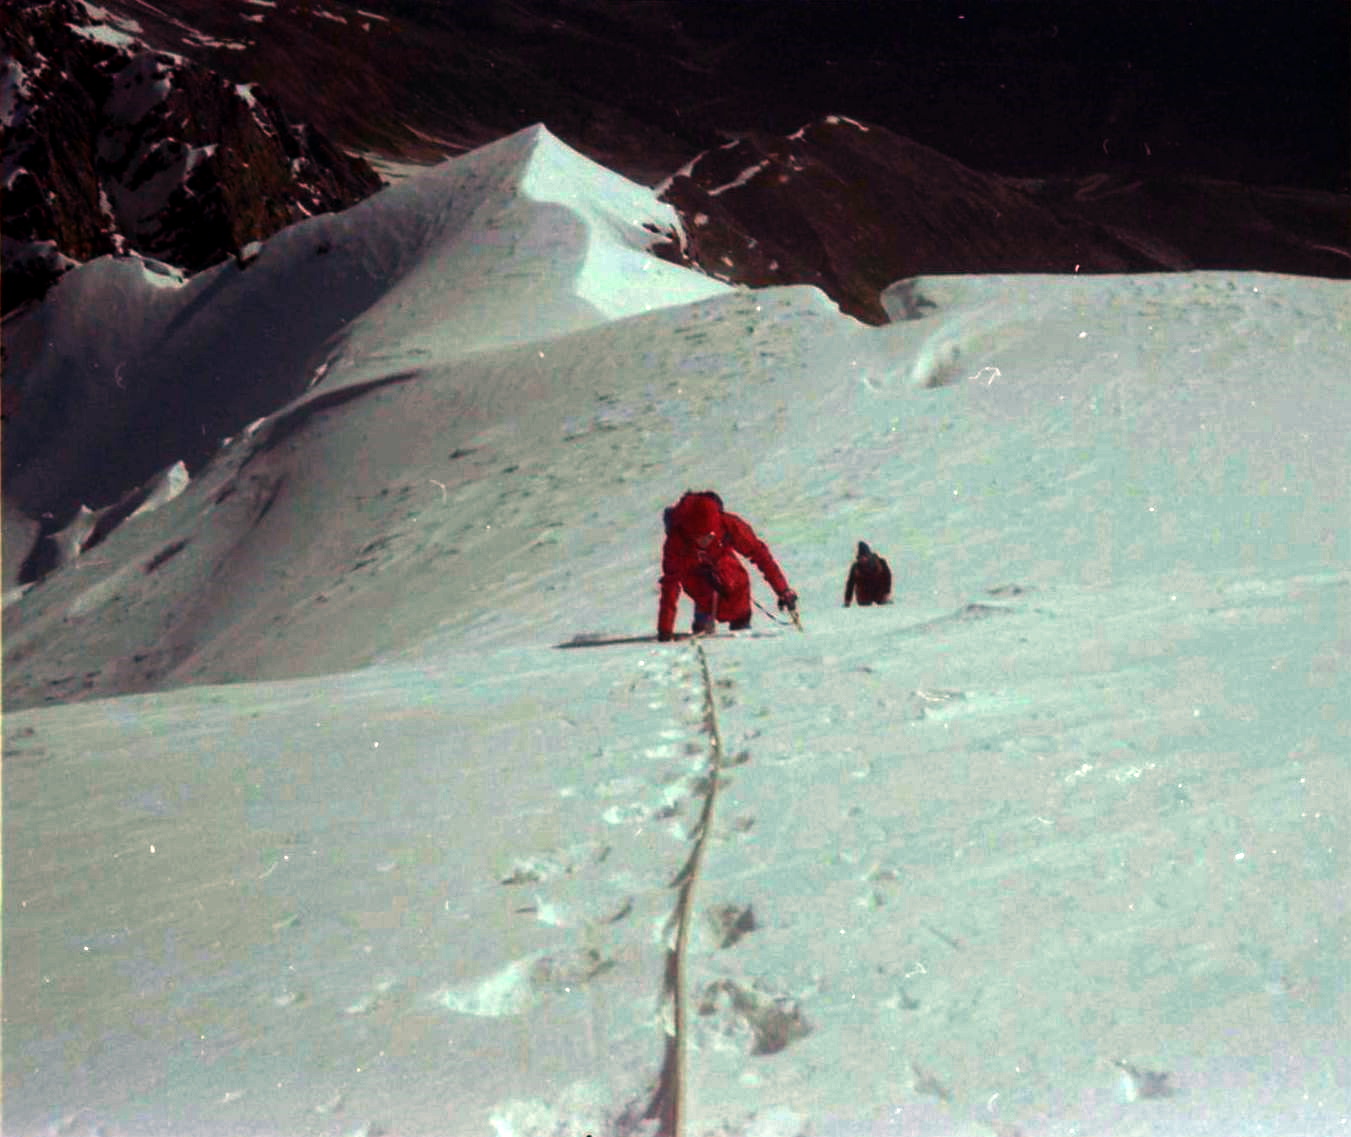 Climbing steep snow slopes to summit